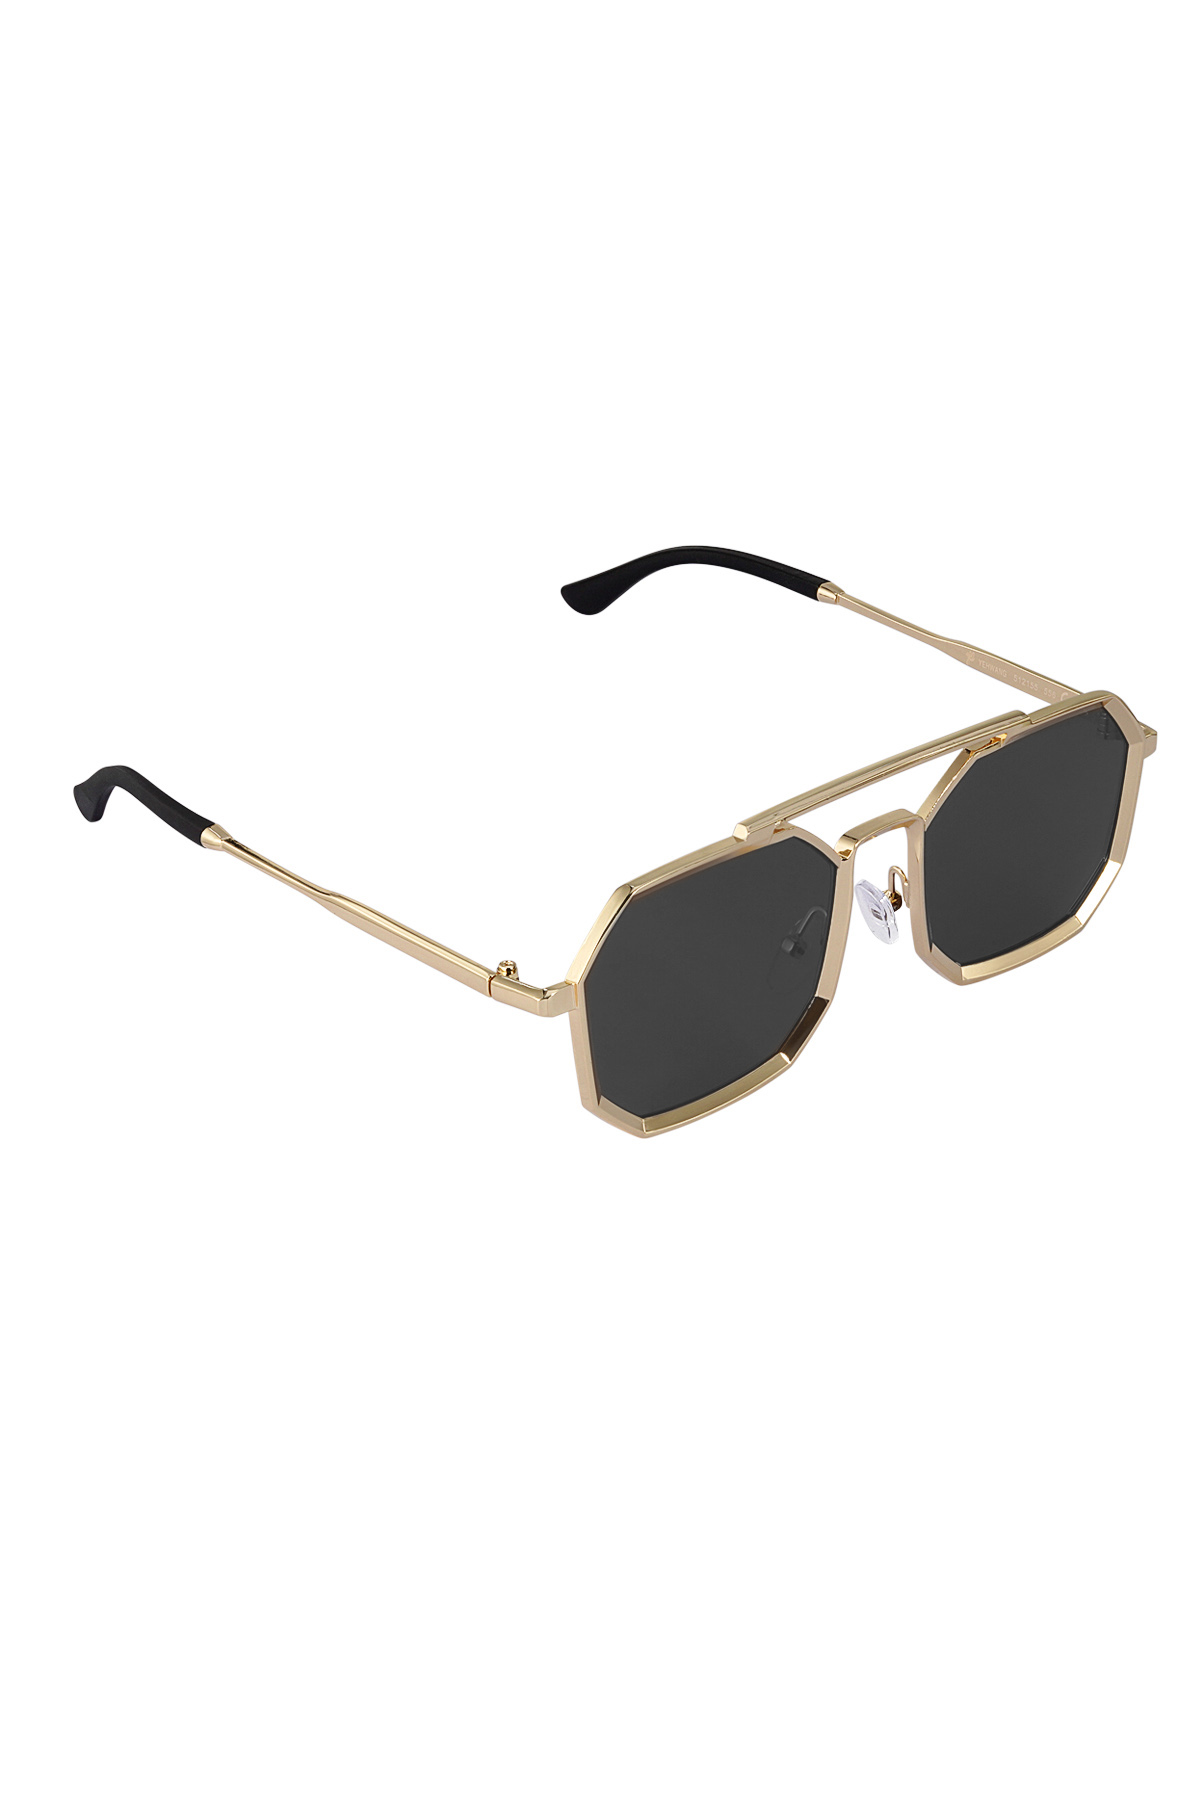 Sunglasses LuminLens - black gold